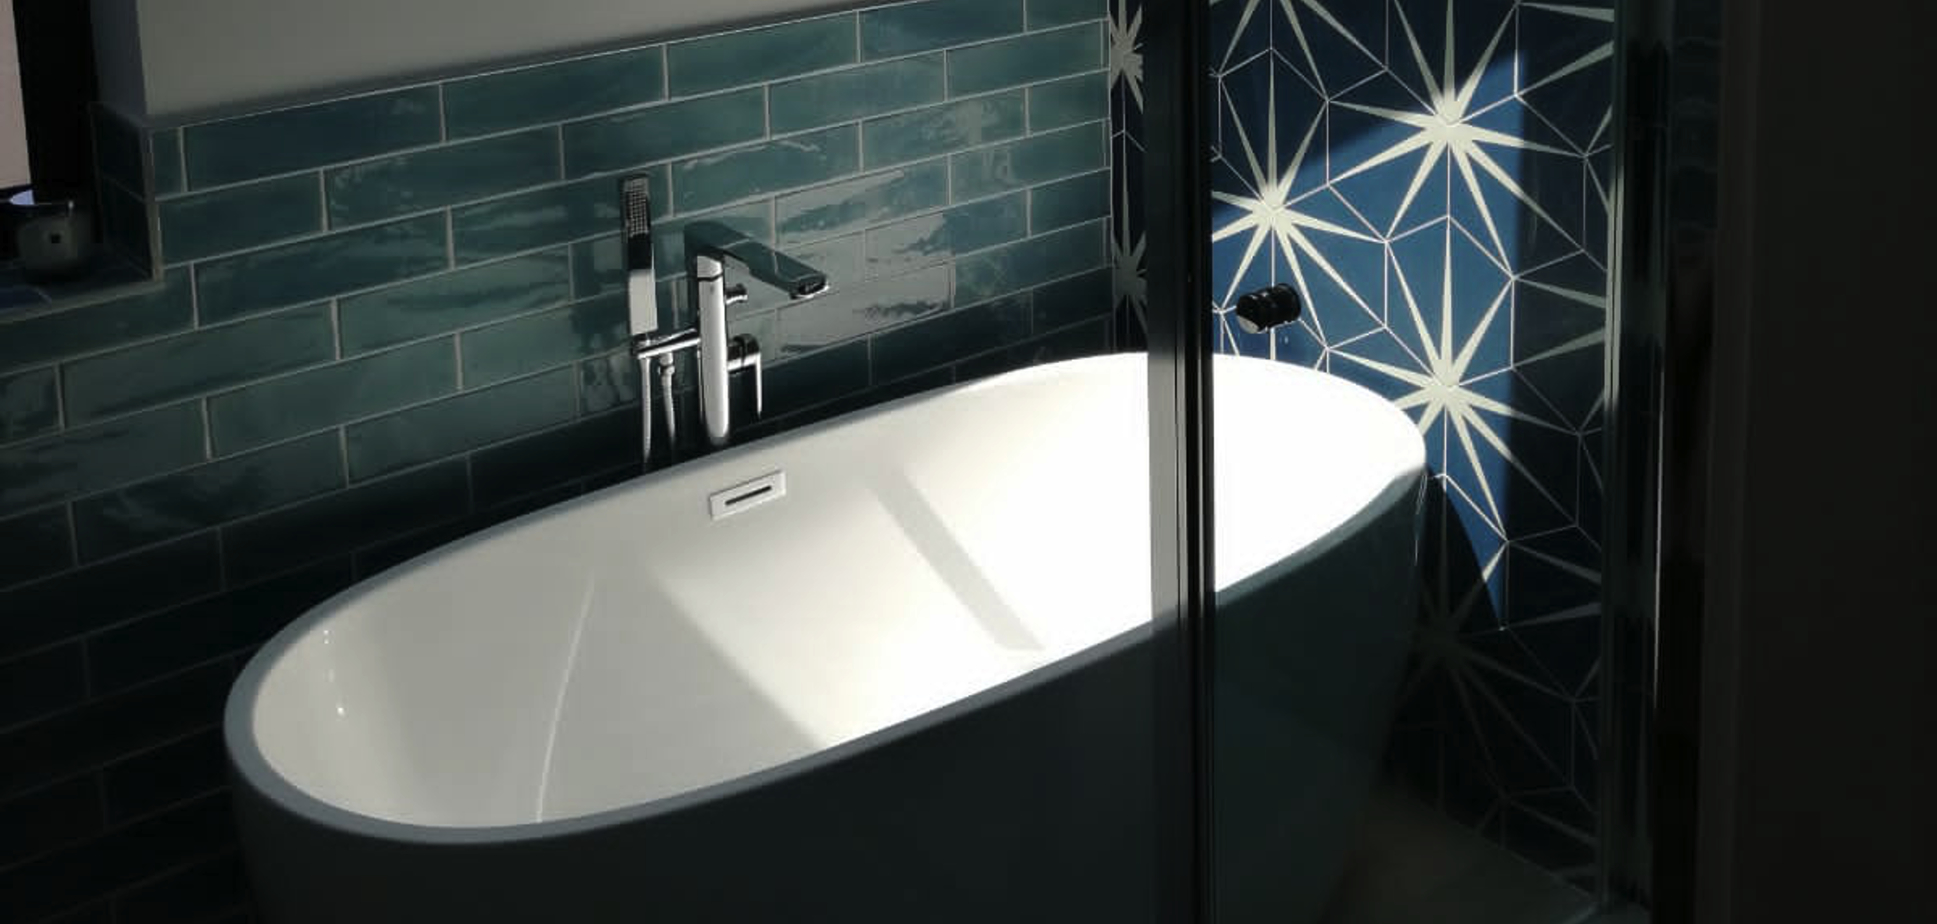 Header image with blue bathroom star tiles